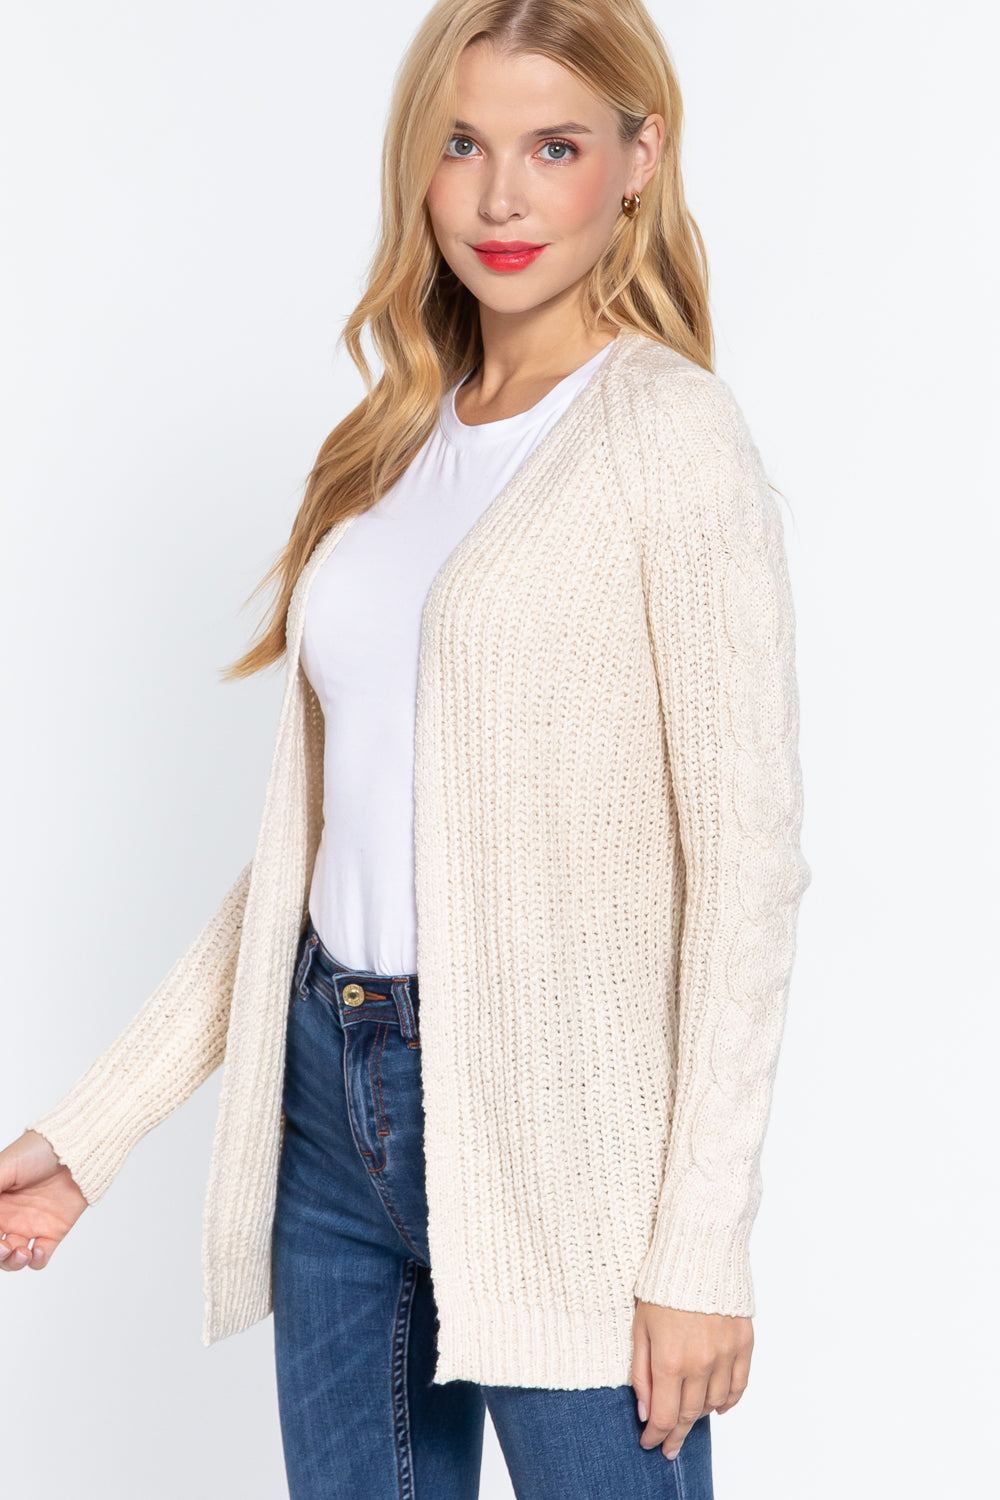 Long Slv Open Front Sweater Cardigan - Tigbuls Variety Fashion